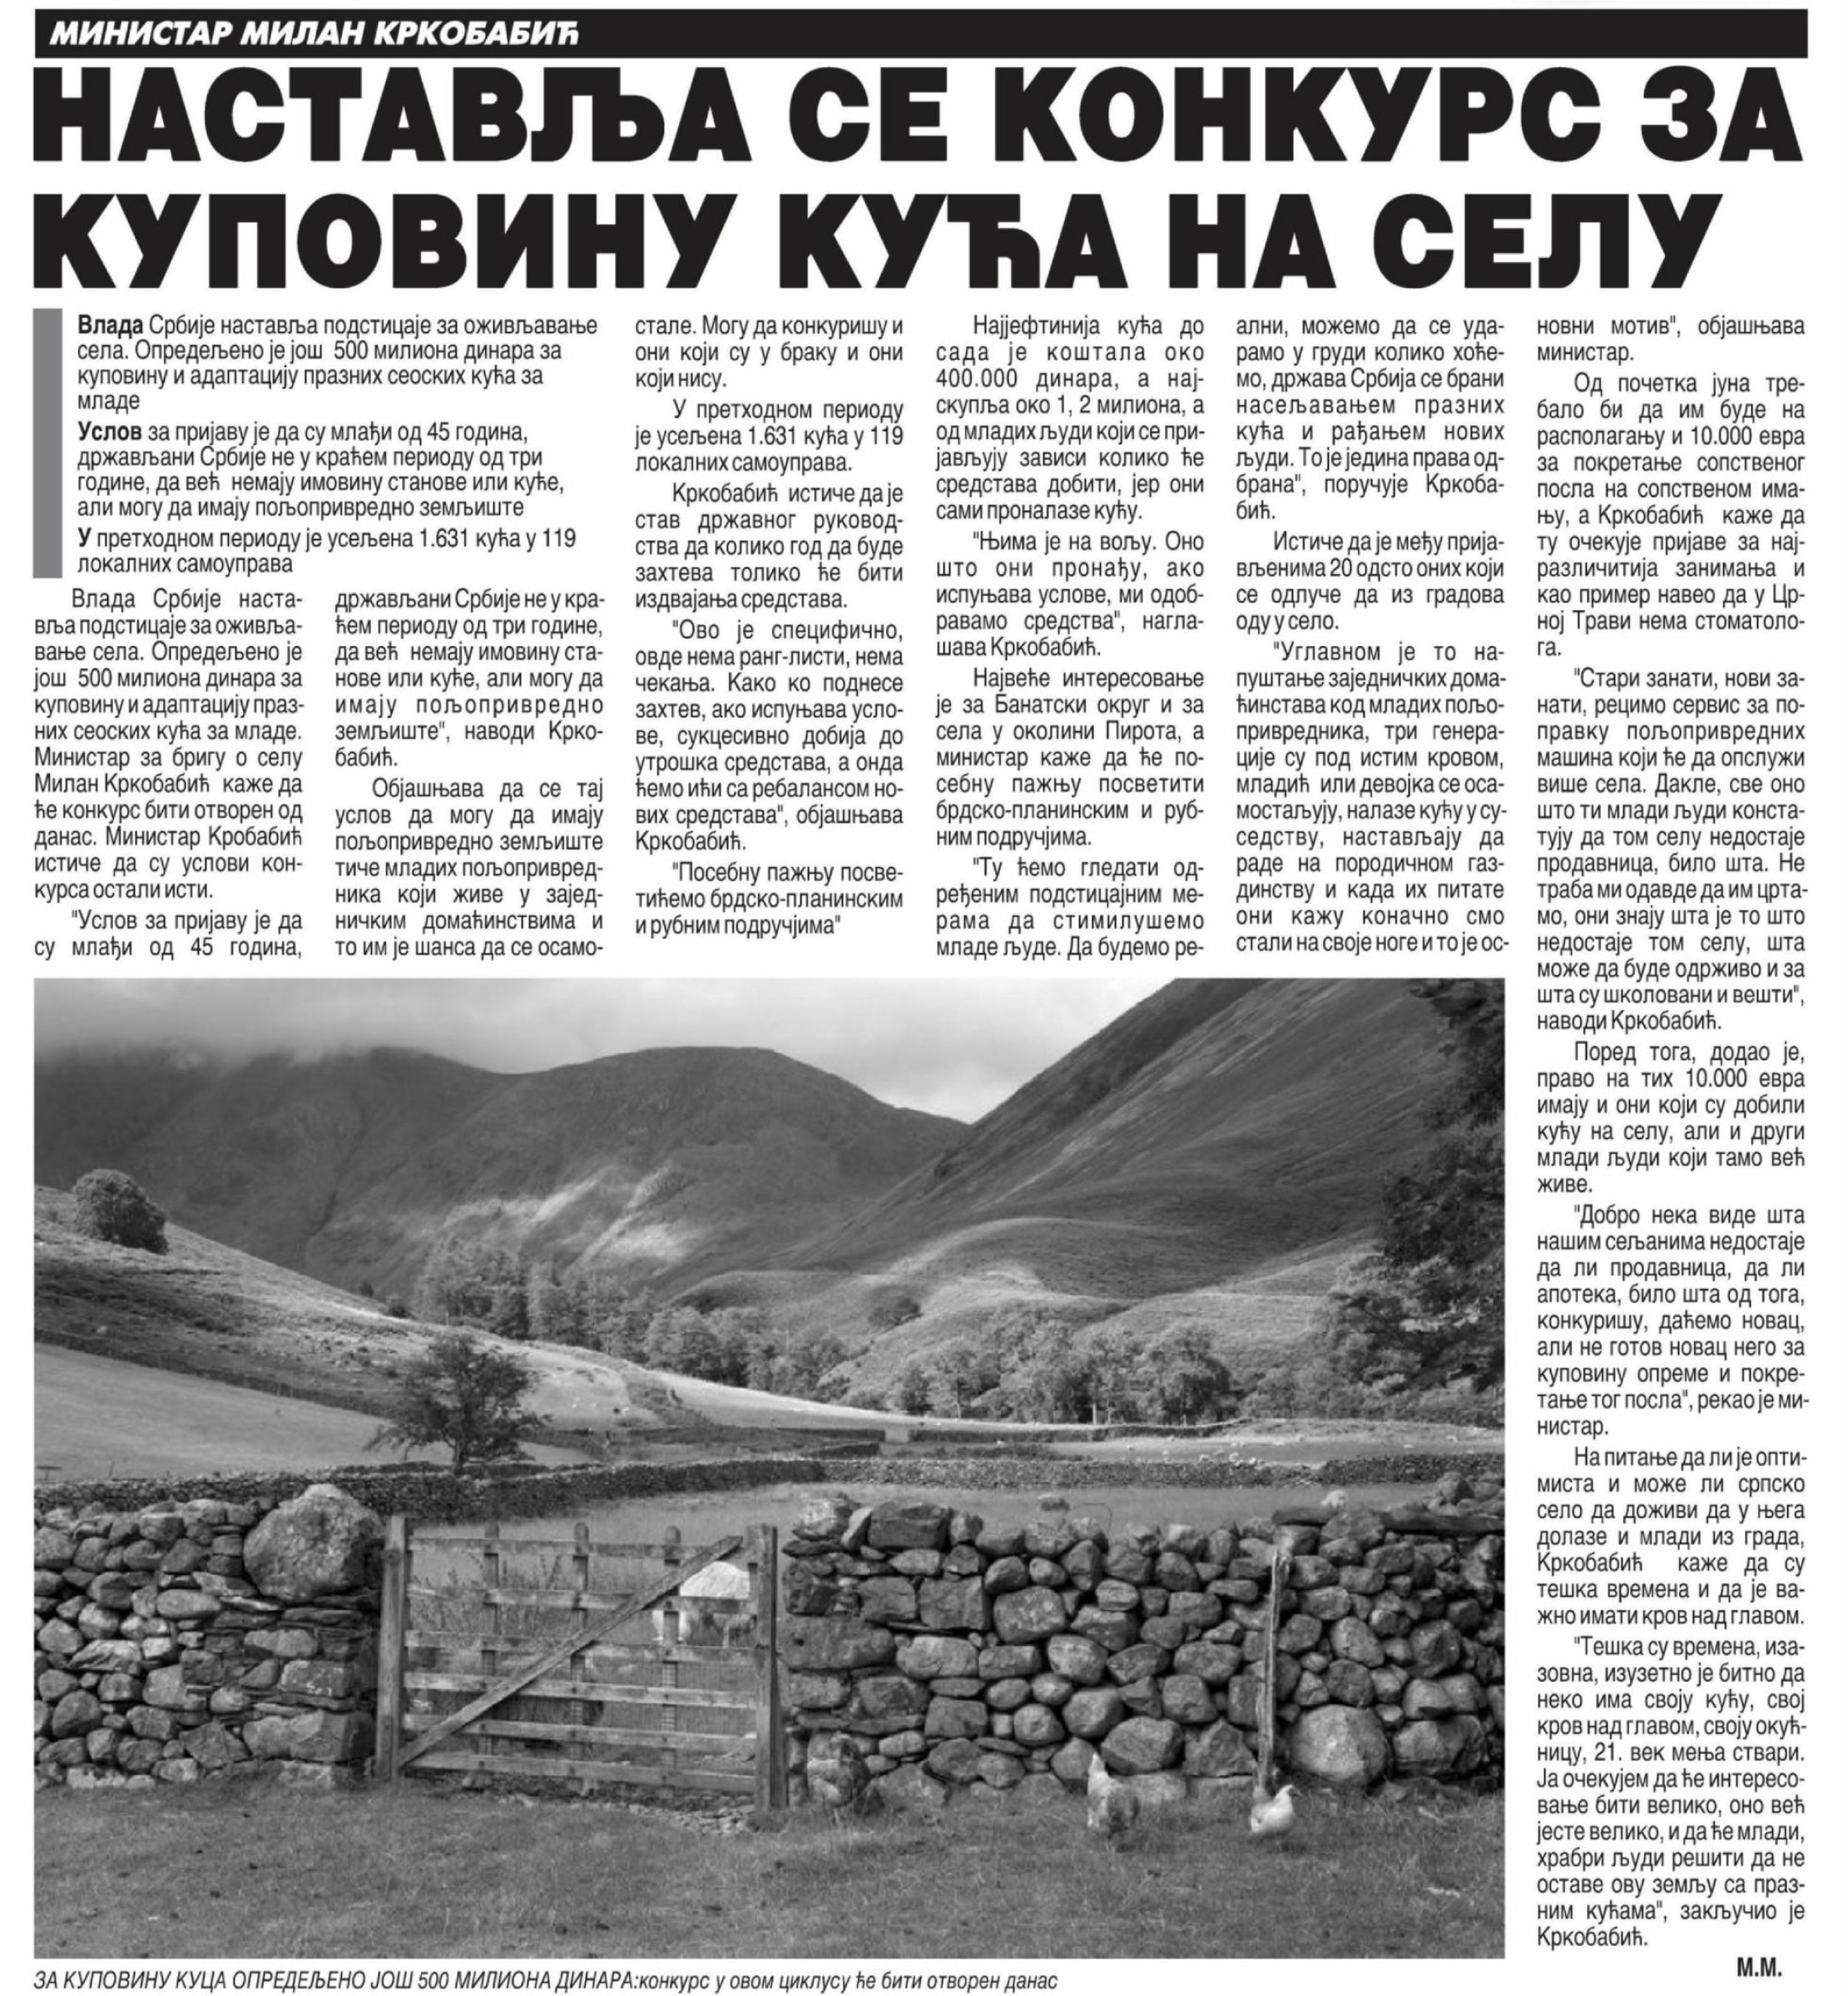  Narodne novine Niš 